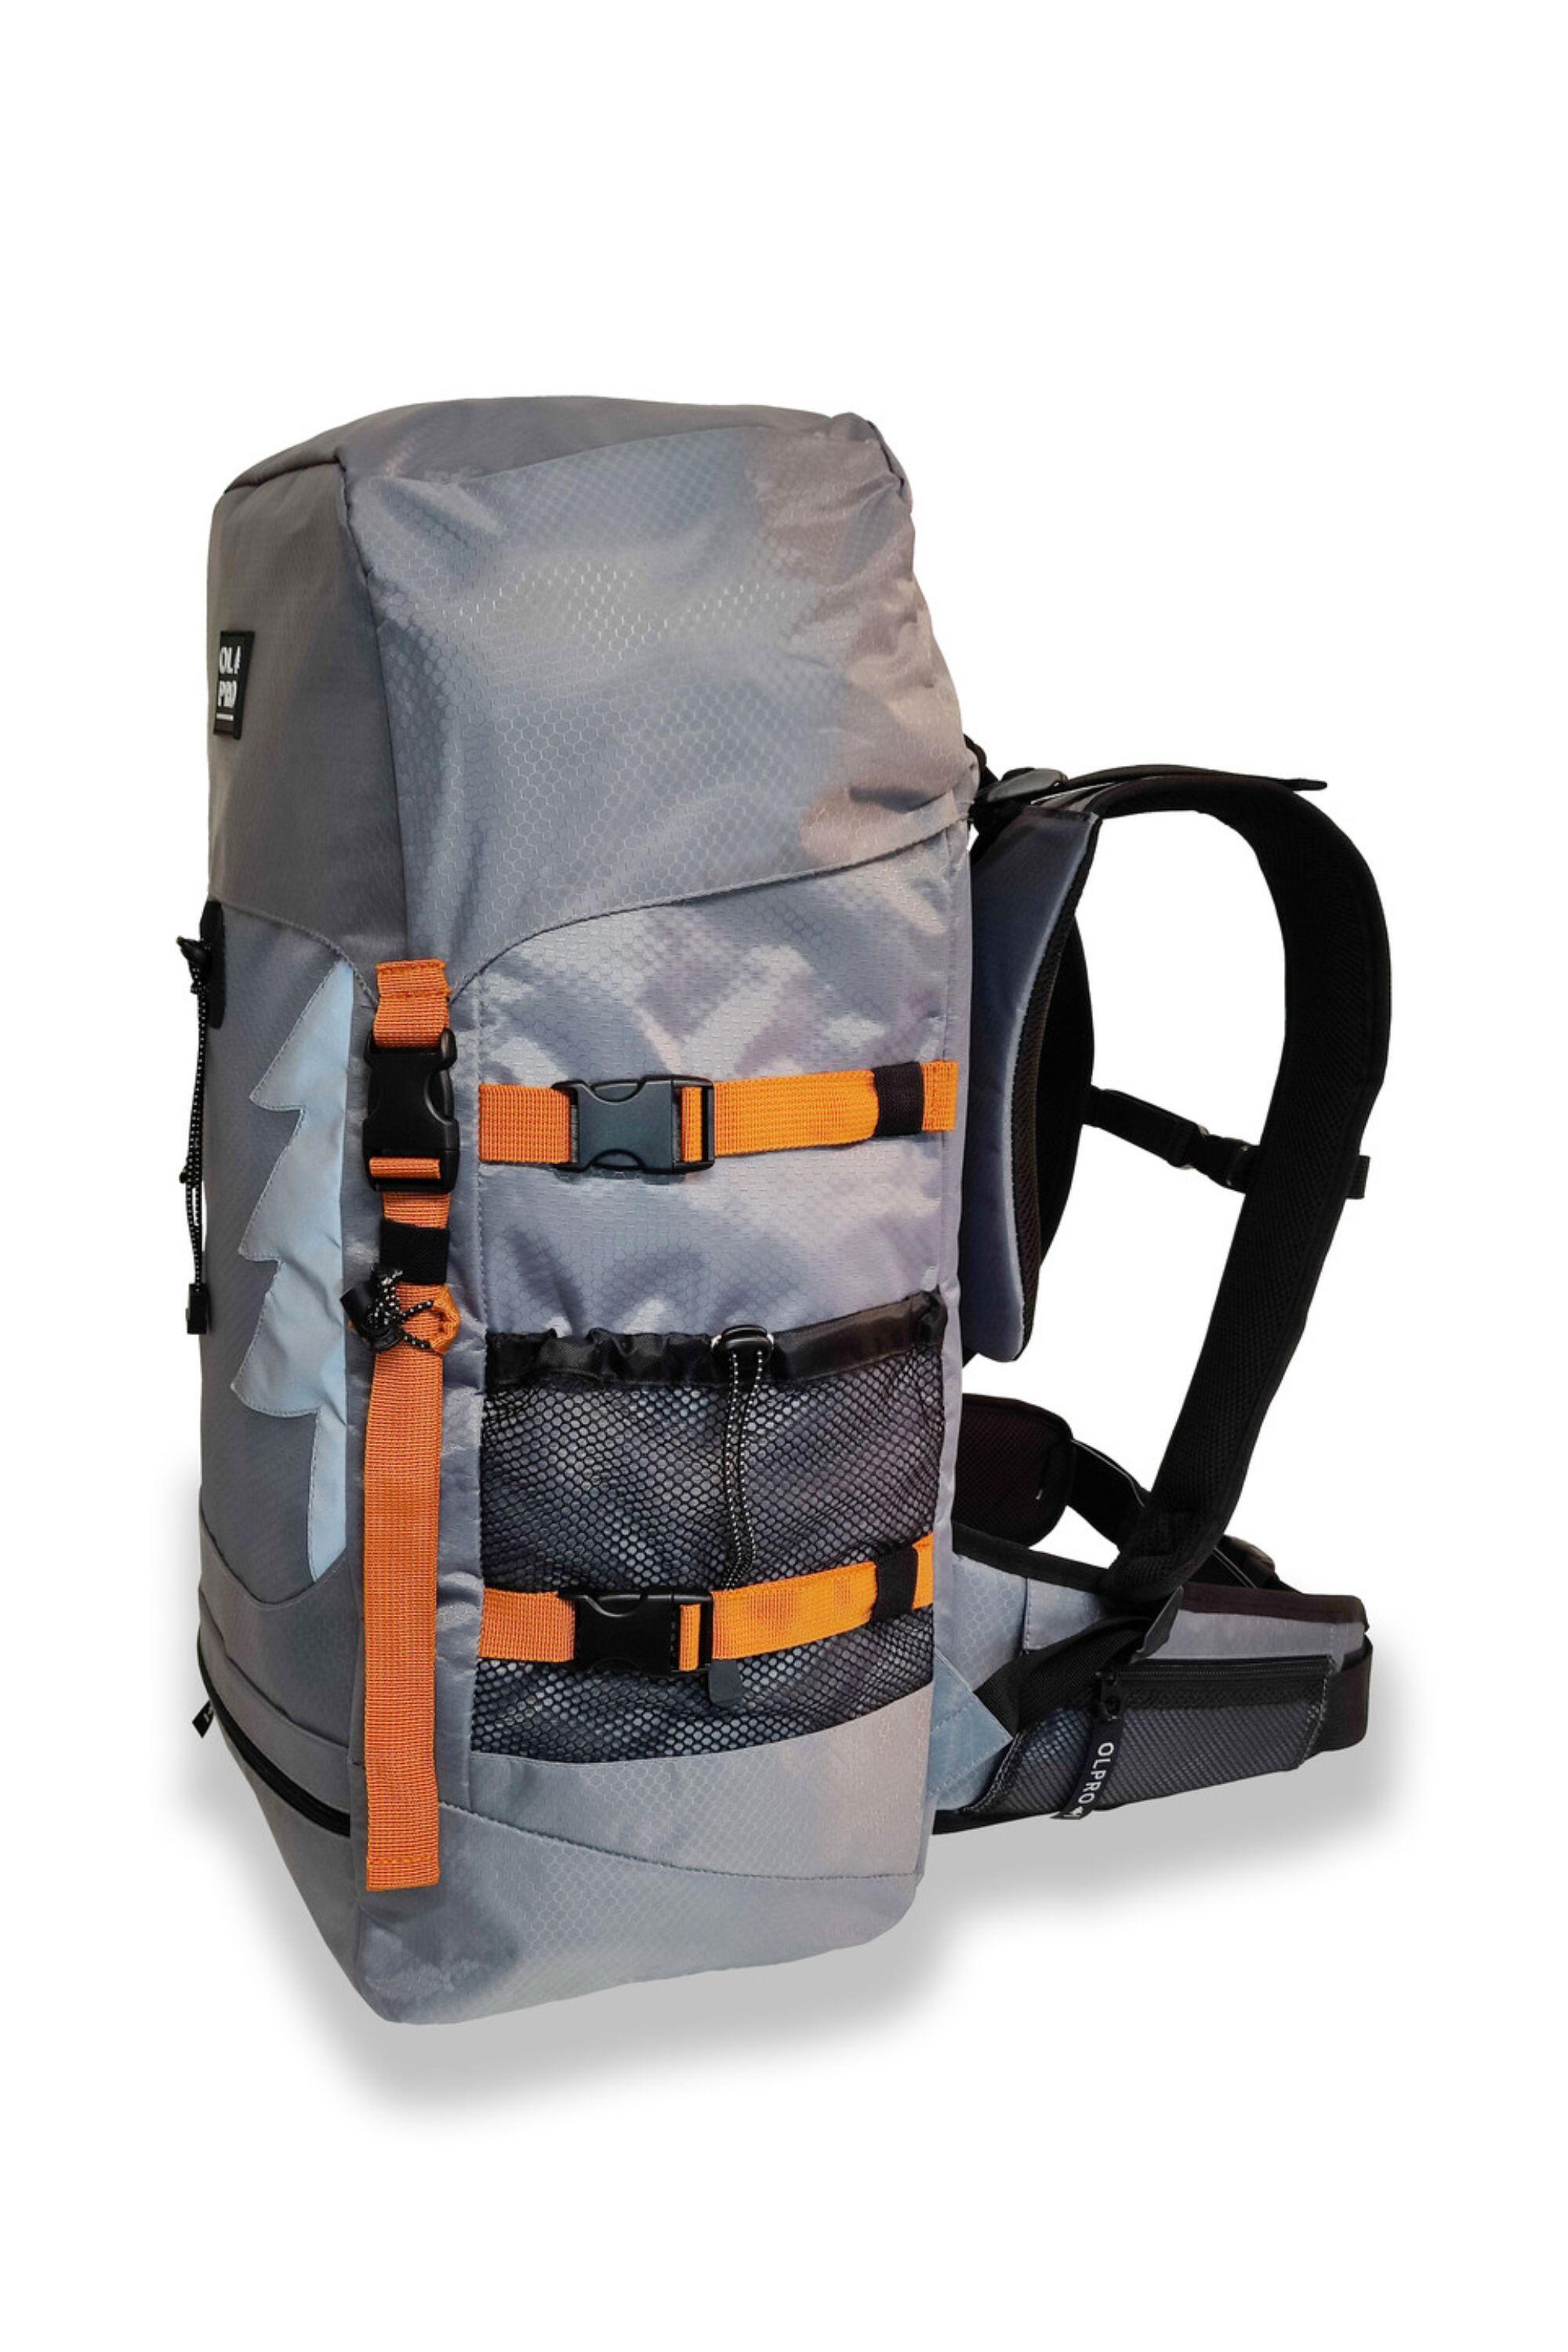 OLPRO 40L Rucksack Bag Grey 3/4